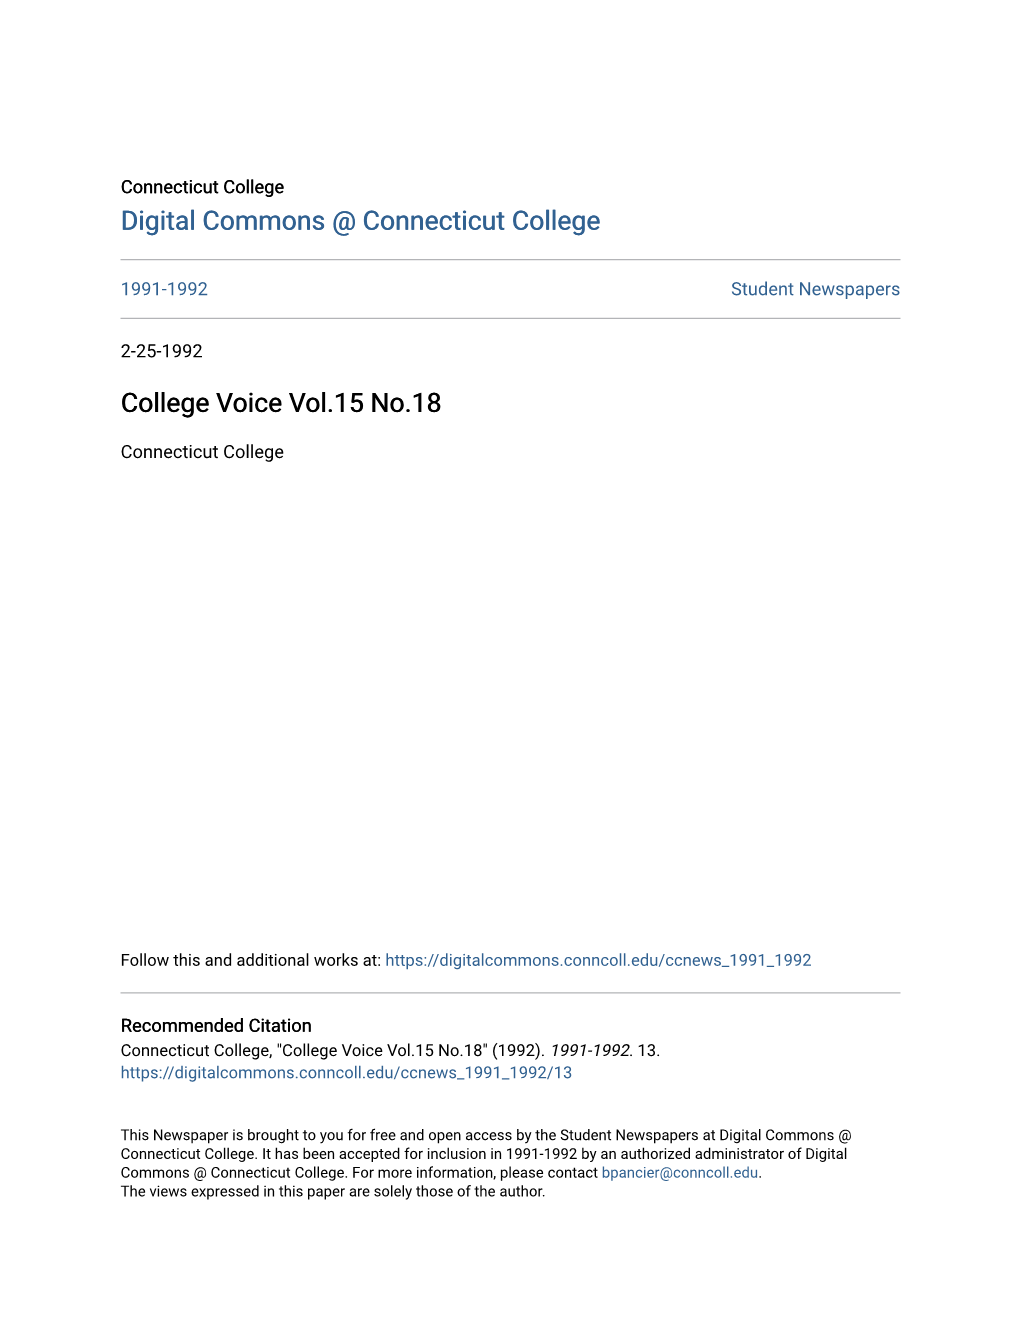 College Voice Vol.15 No.18